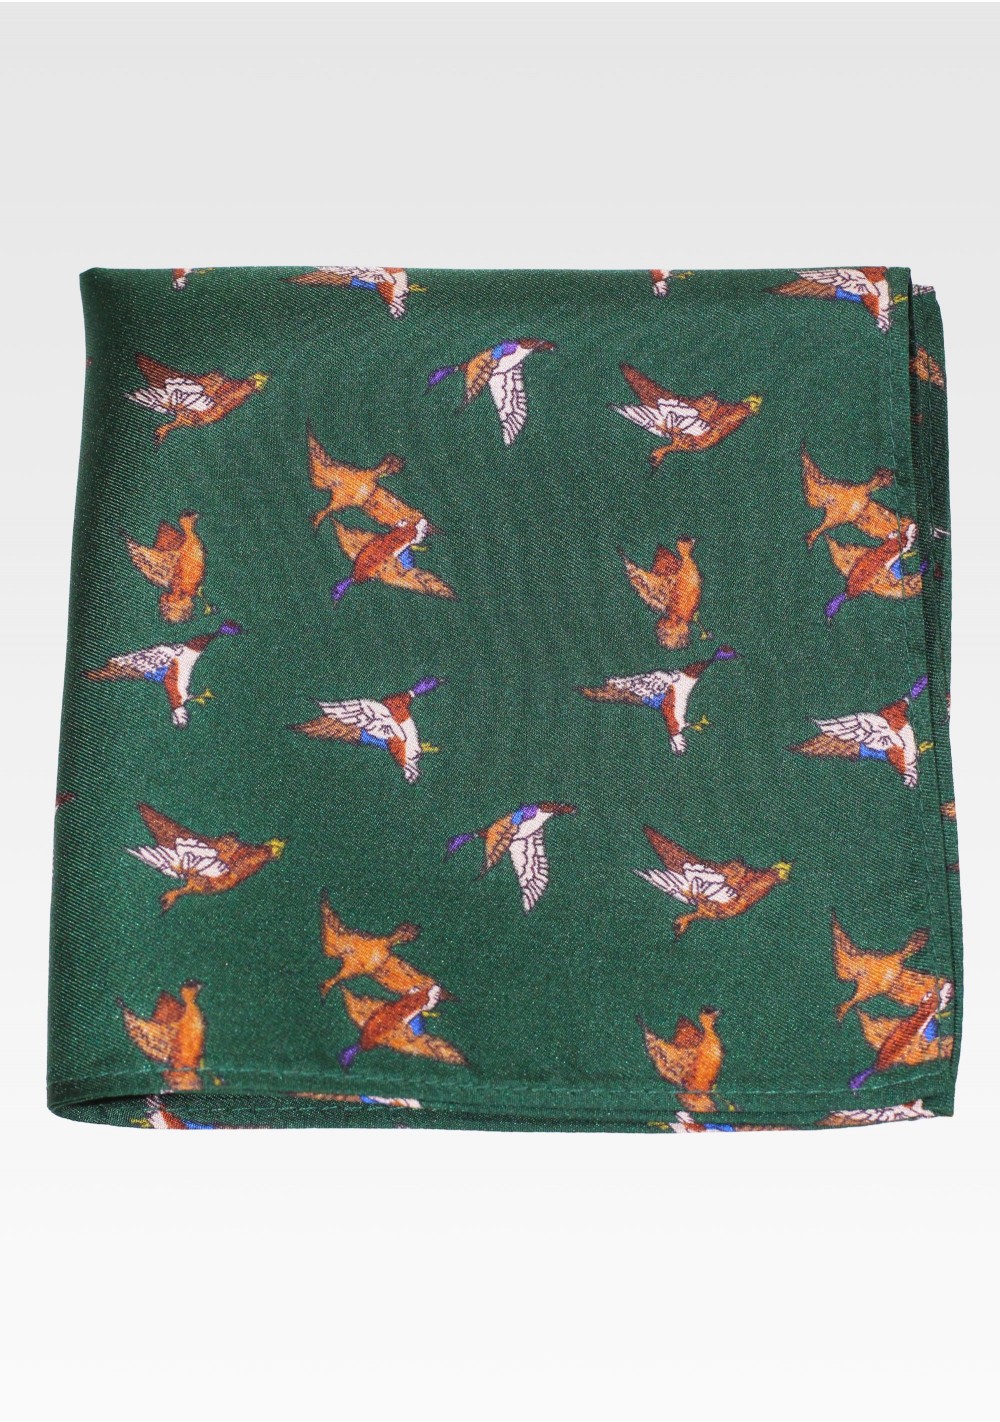 Hunter Green Silk Pocket Square with Flying Ducks